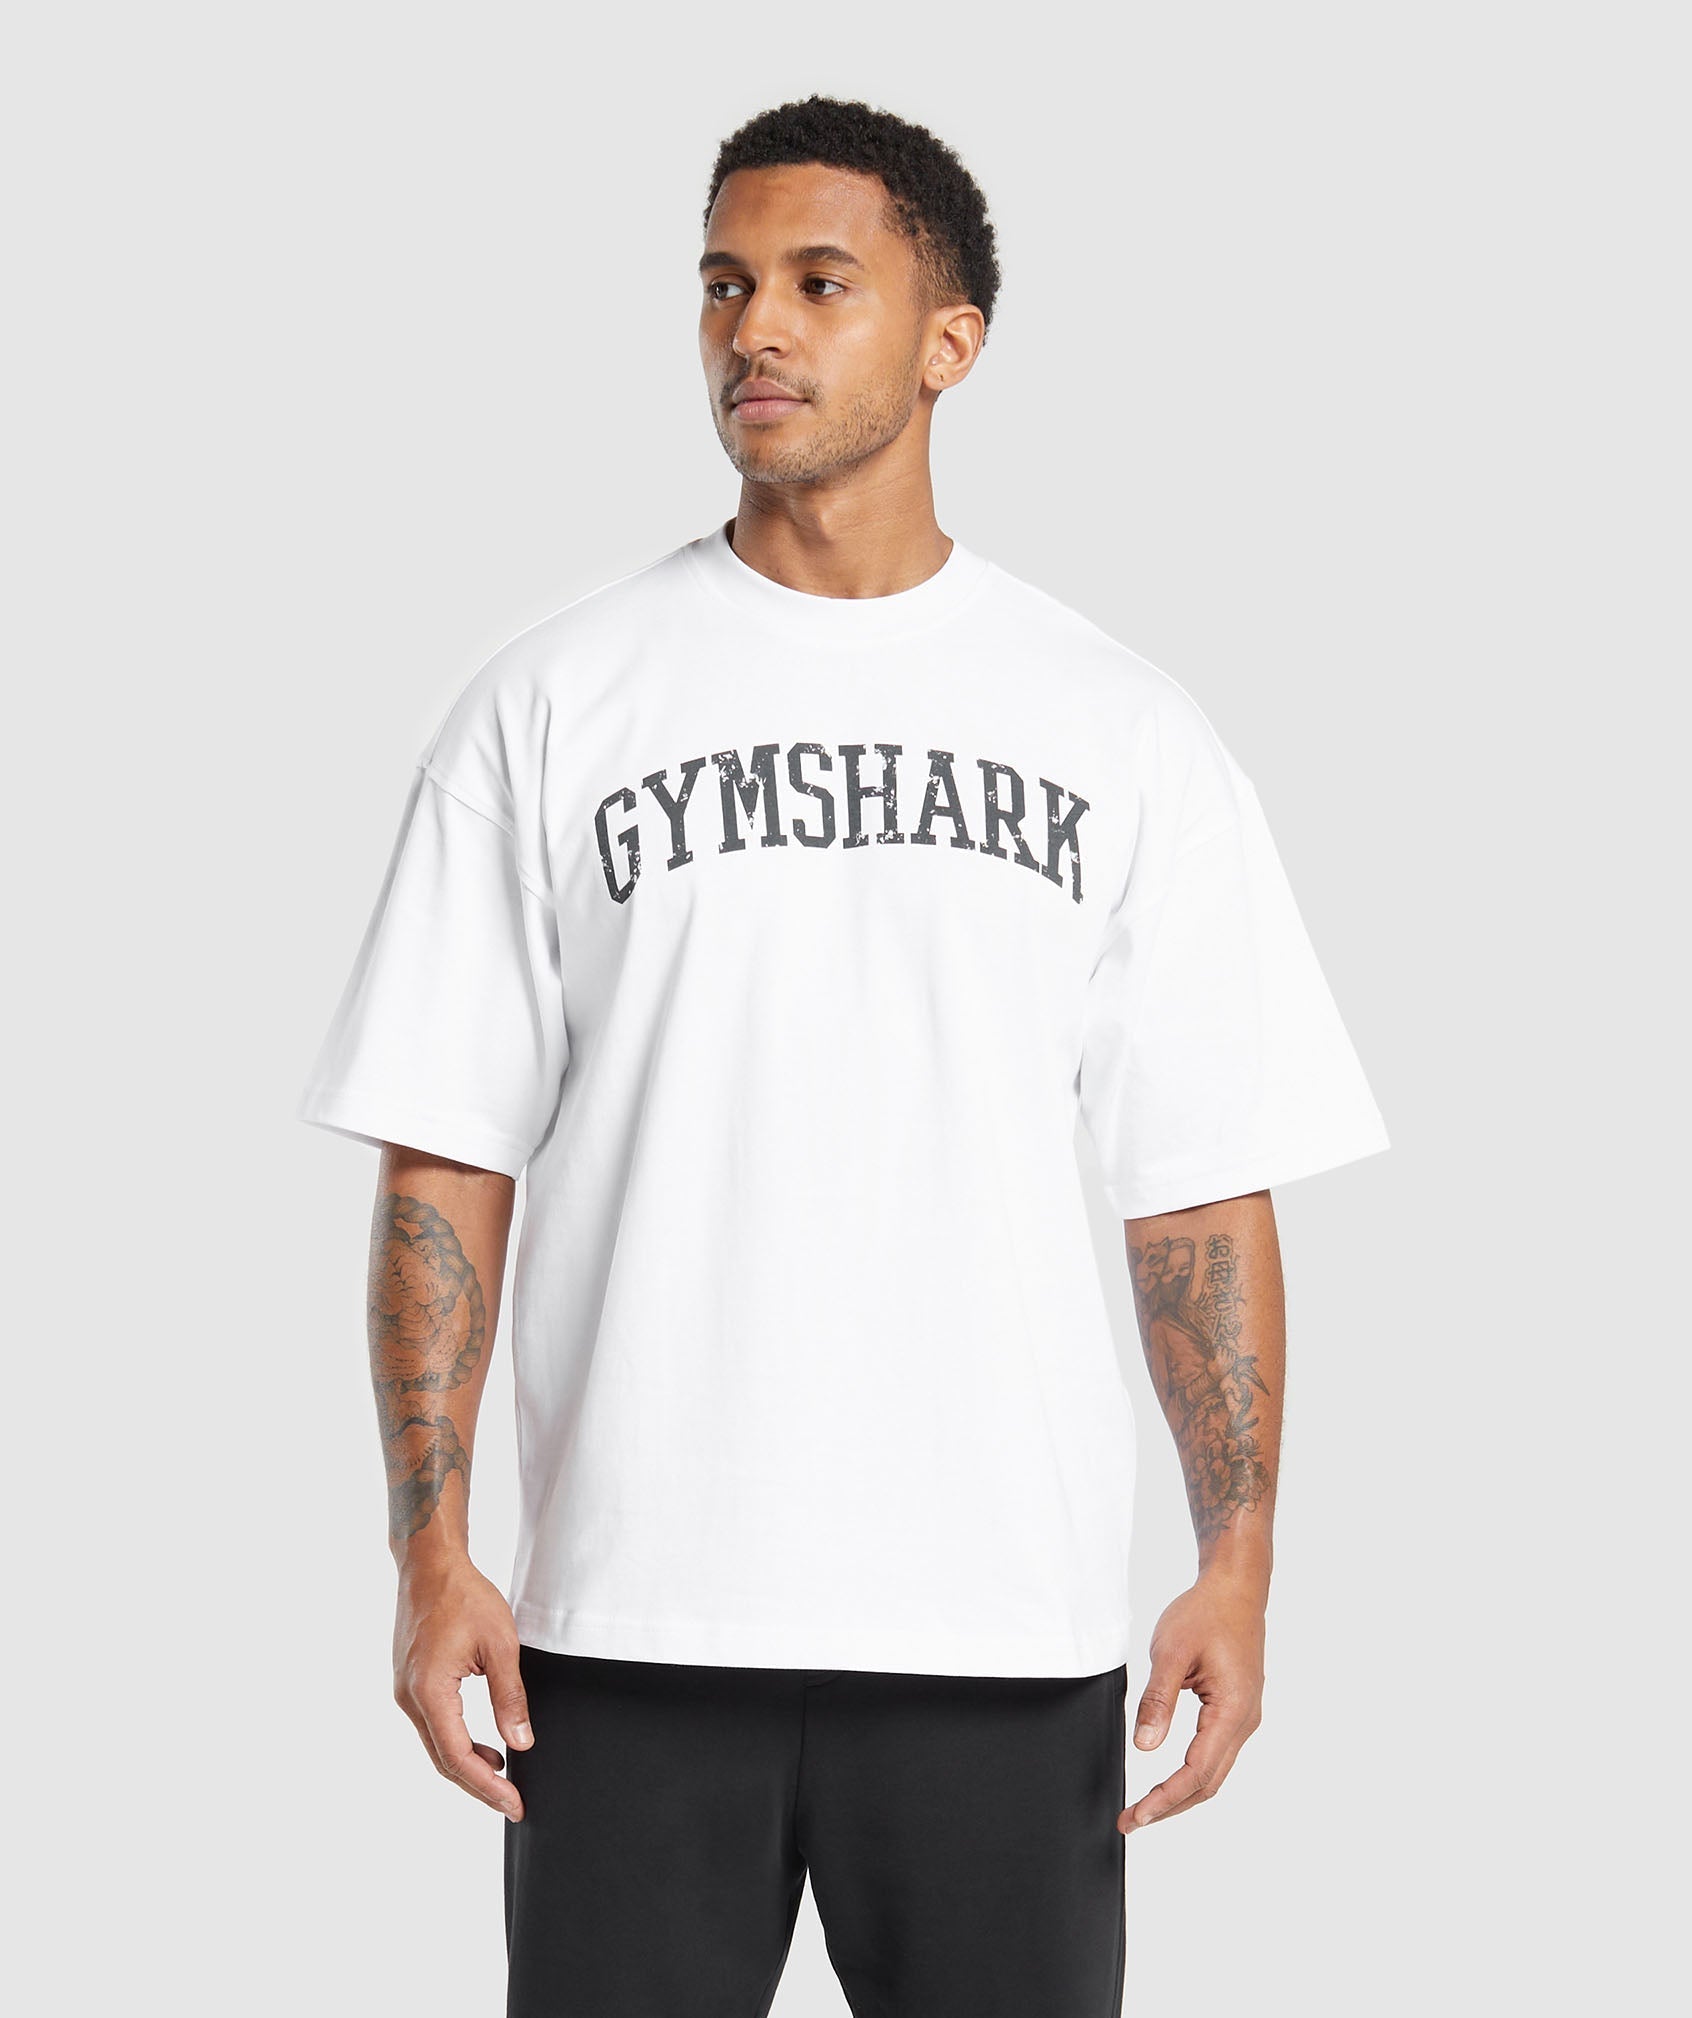 Collegiate T-Shirt in White - view 1